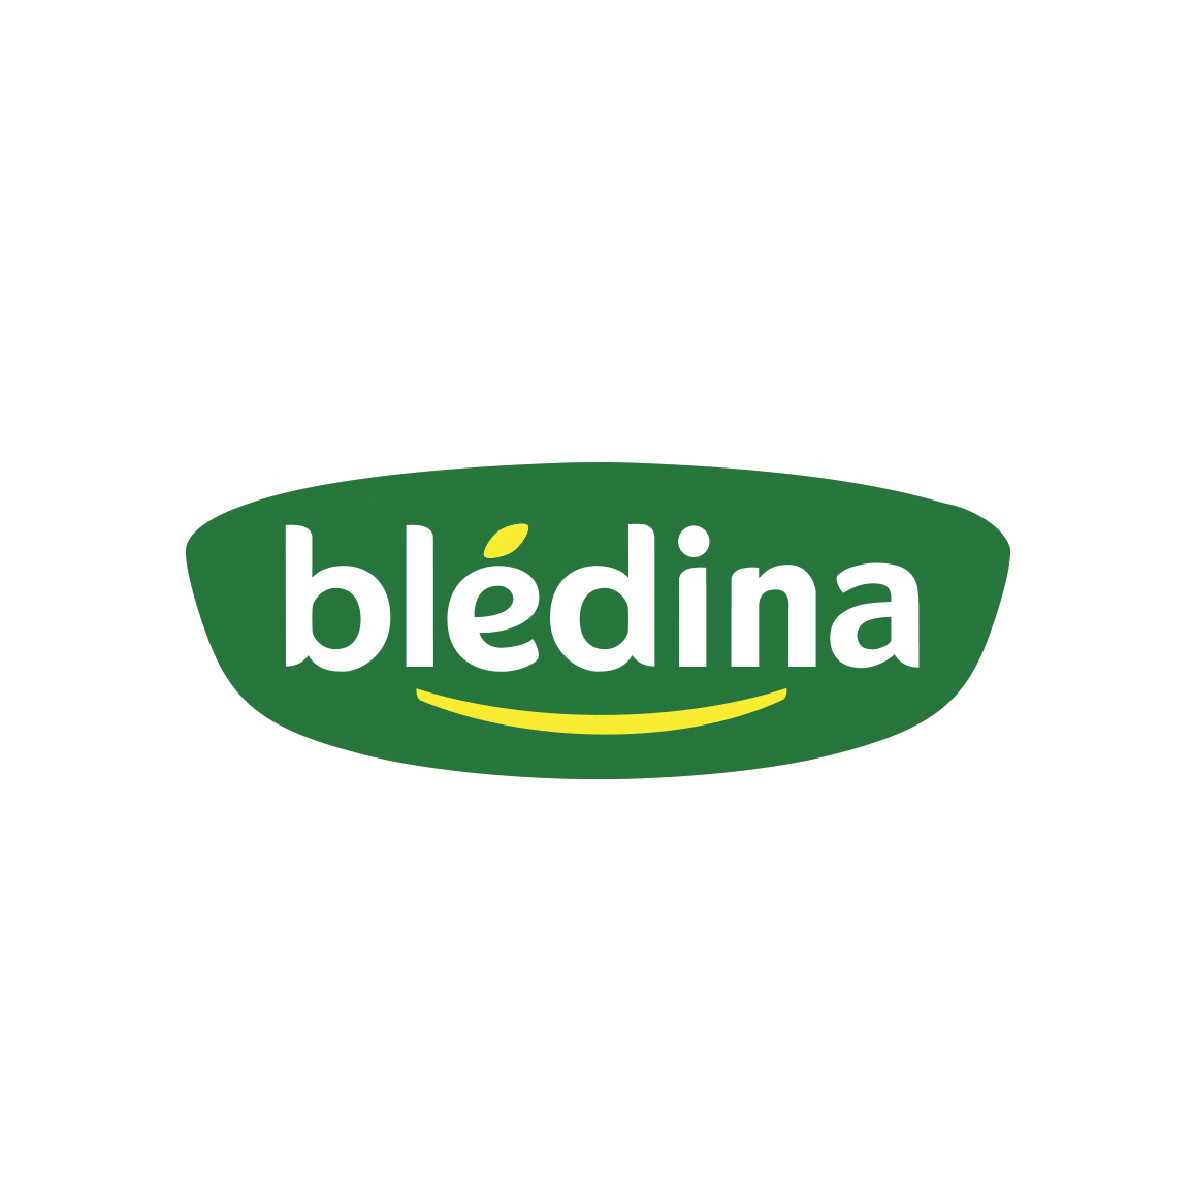 logo_bledina_martinique_guadeloupe_regidom_clients_communication.png@4x